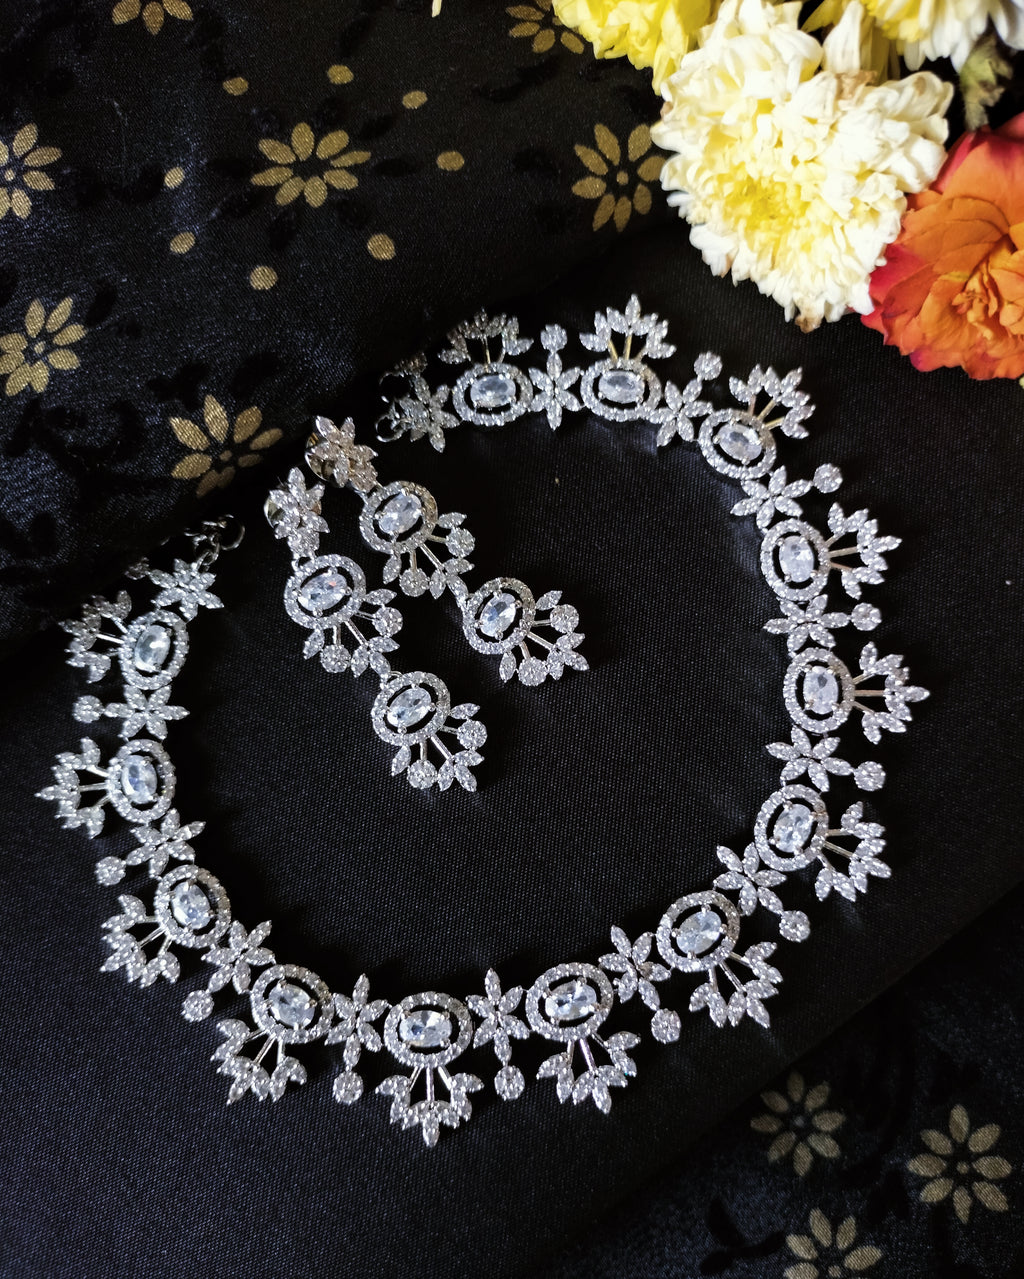 N0369_Elegant dazzling American Diamond stones embellished necklace set with delicate stone work.